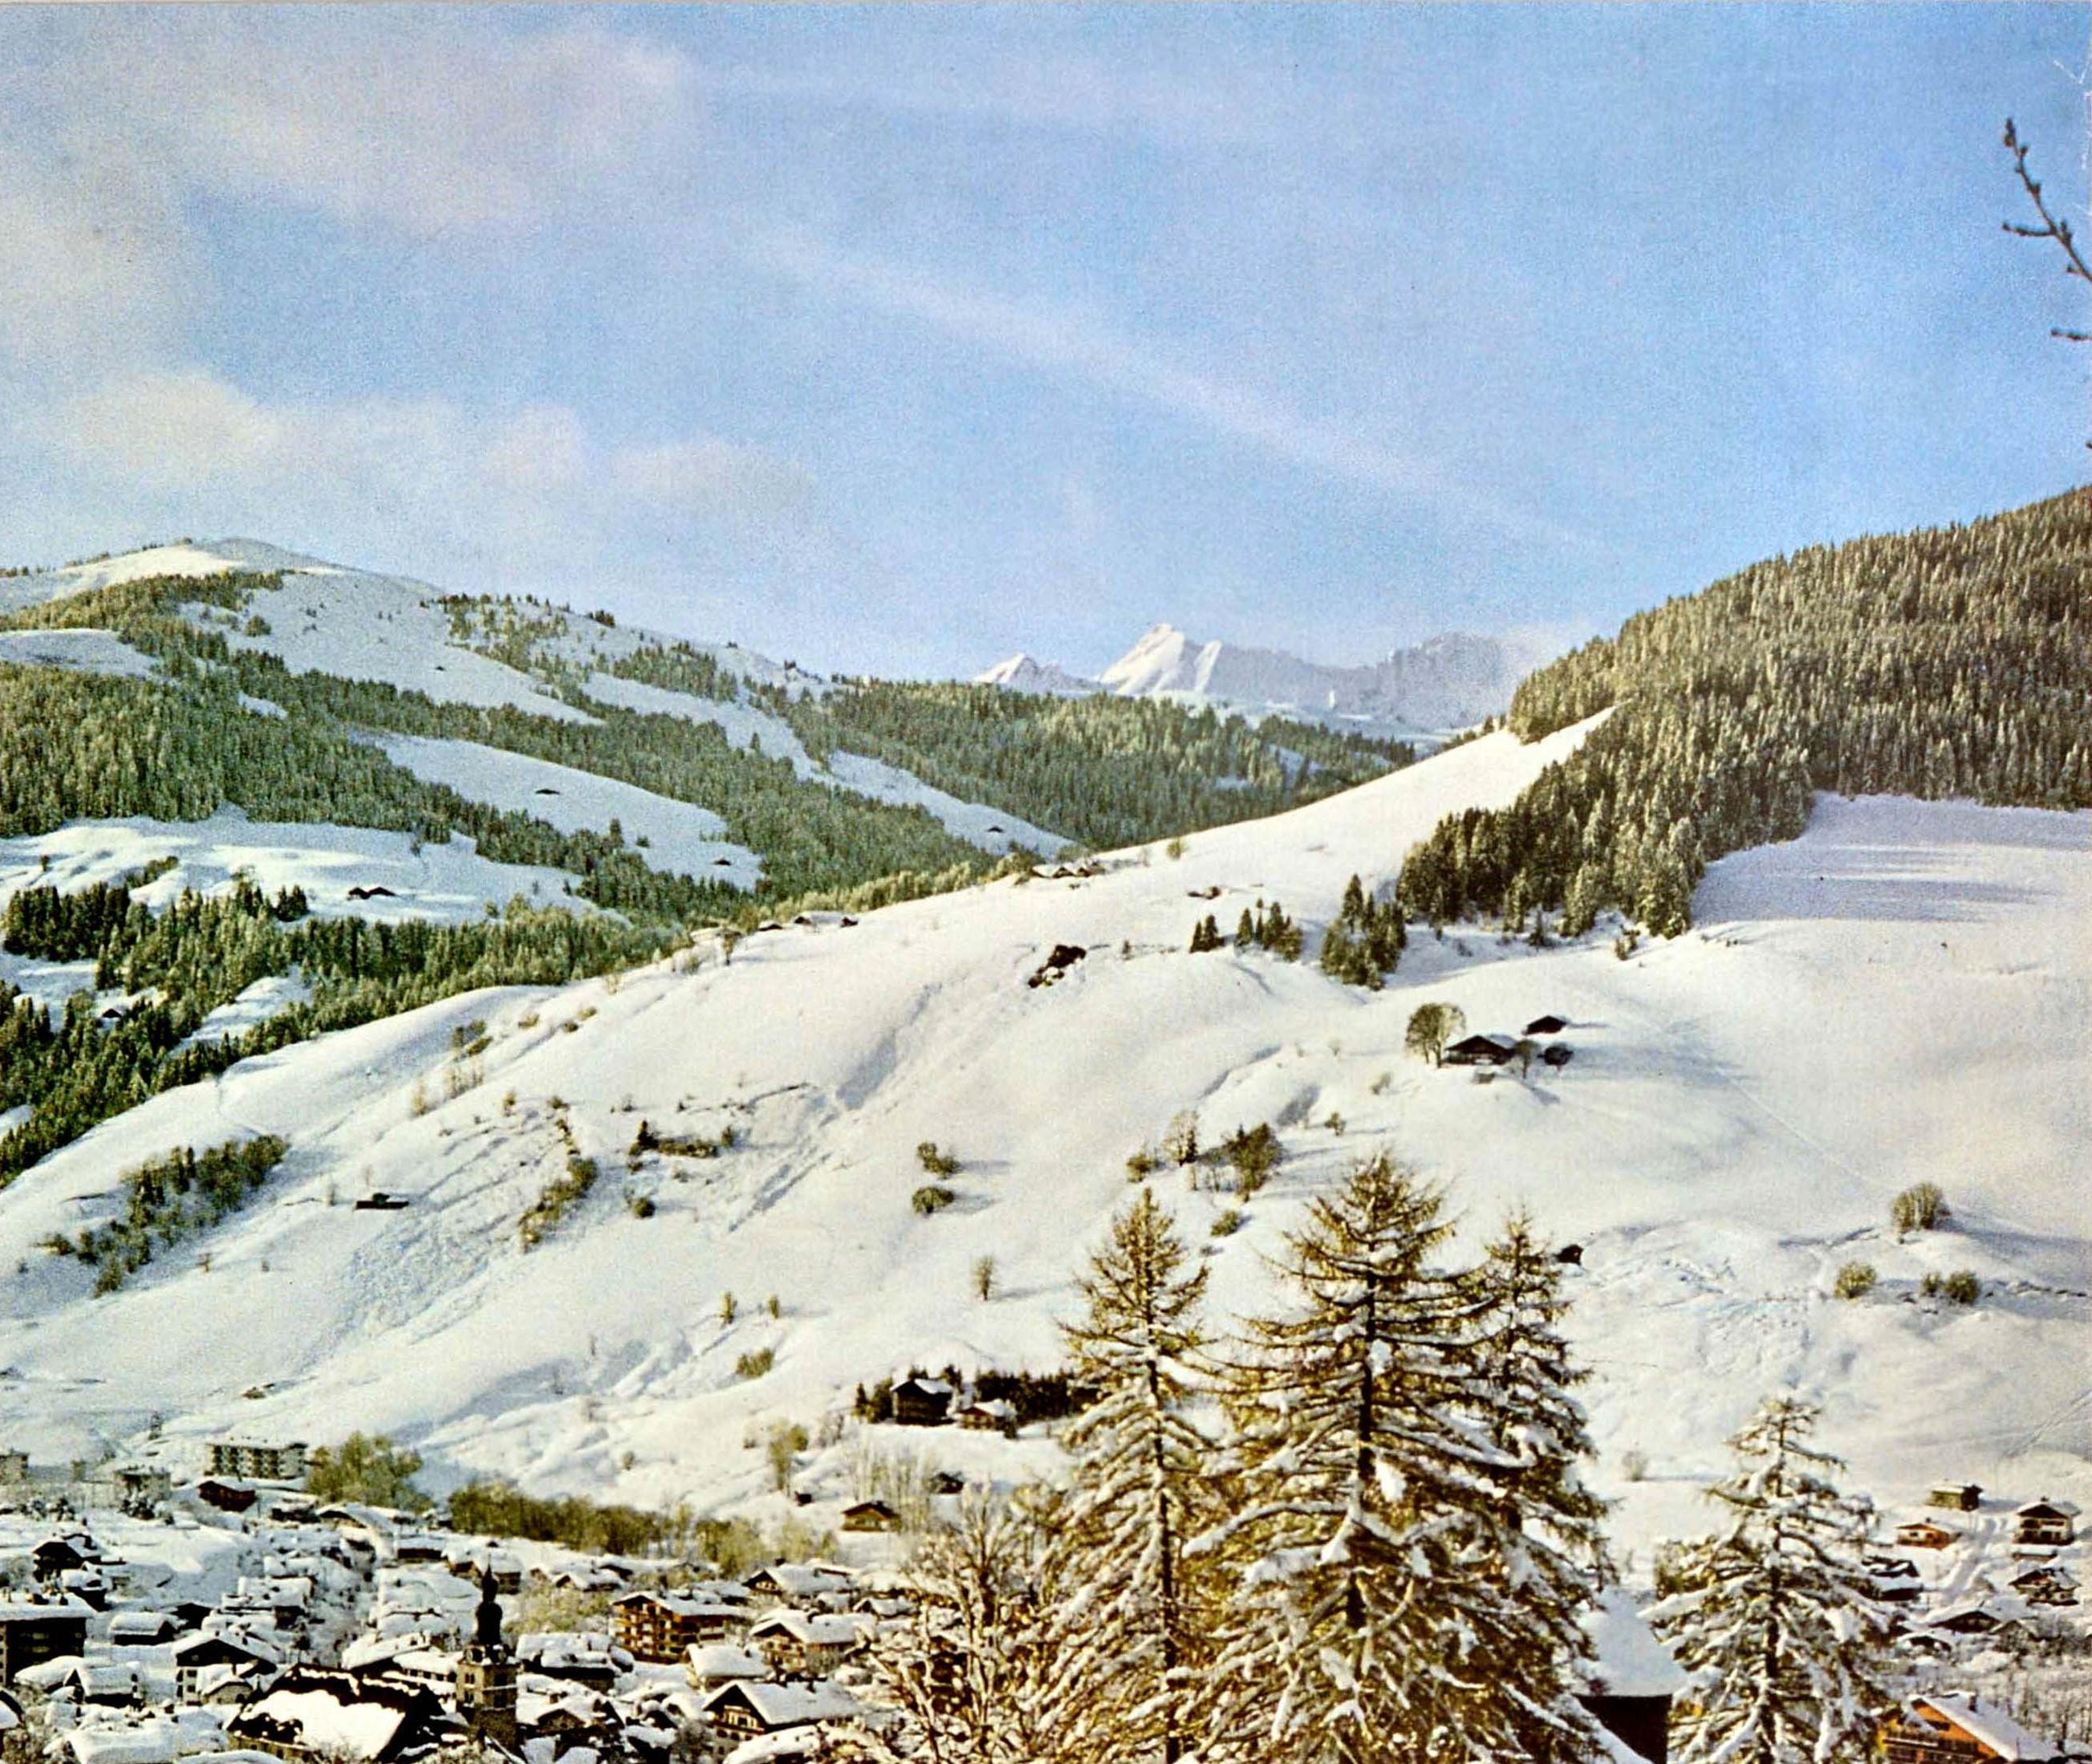 Original Vintage Poster Megeve France Alps Mountains Skiing Winter Sport Resort - Print by Tops Socquet